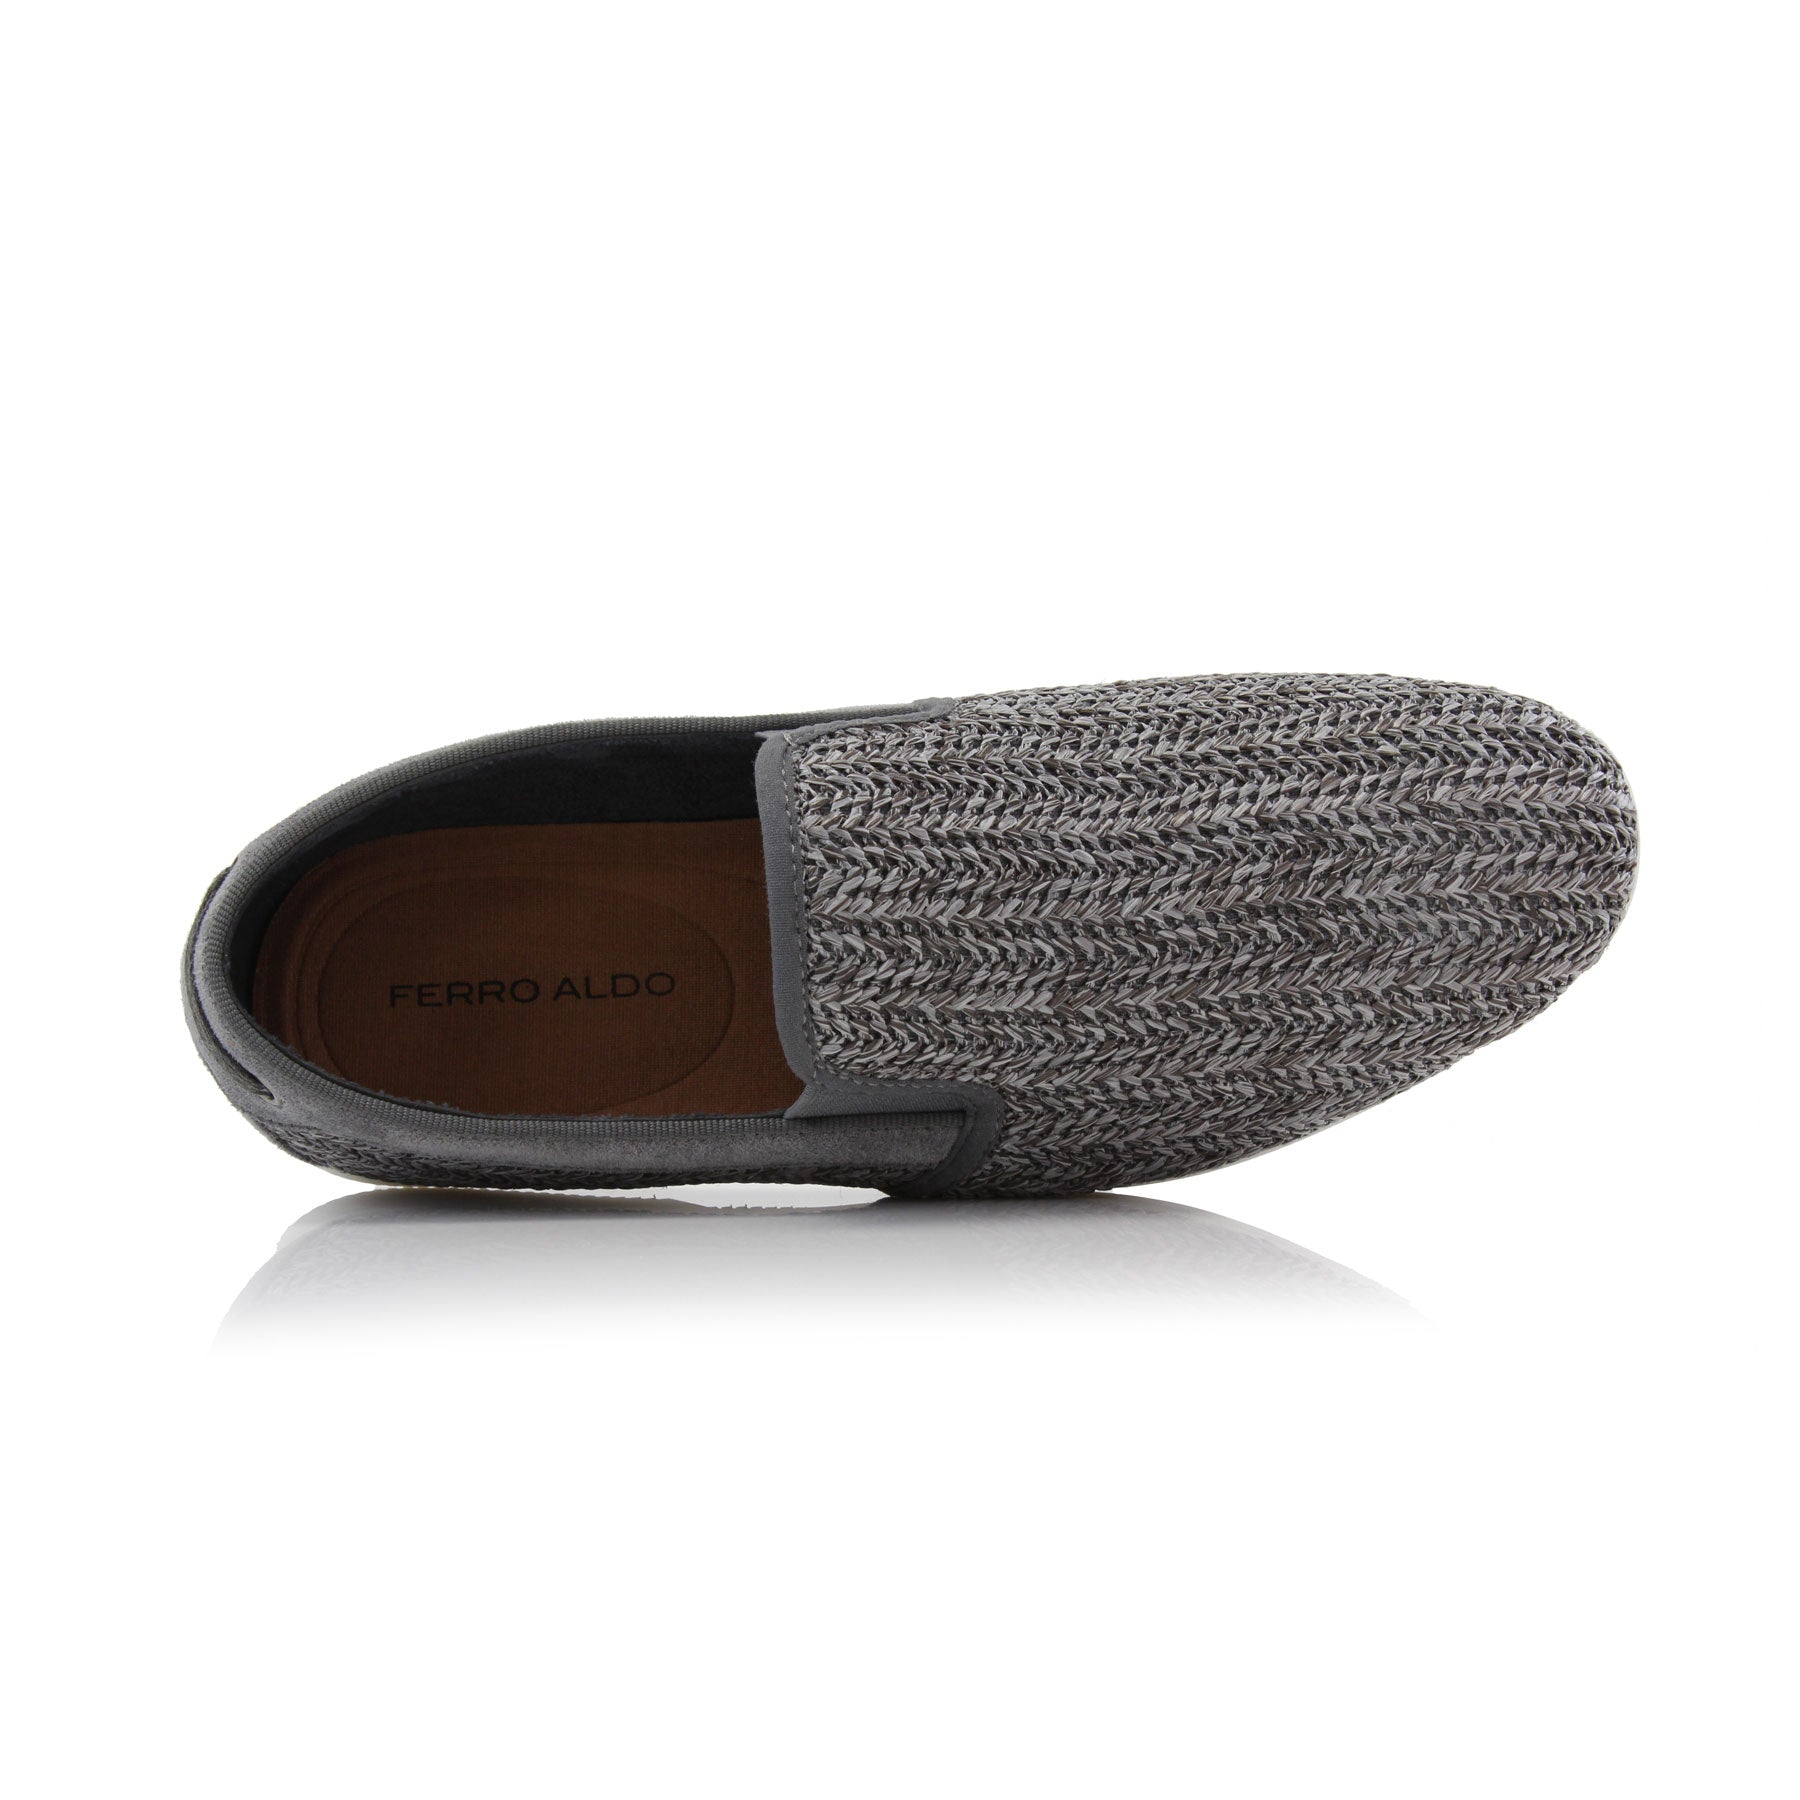 Woven Loafers | Jiro by Ferro Aldo | Conal Footwear | Top-Down Angle View